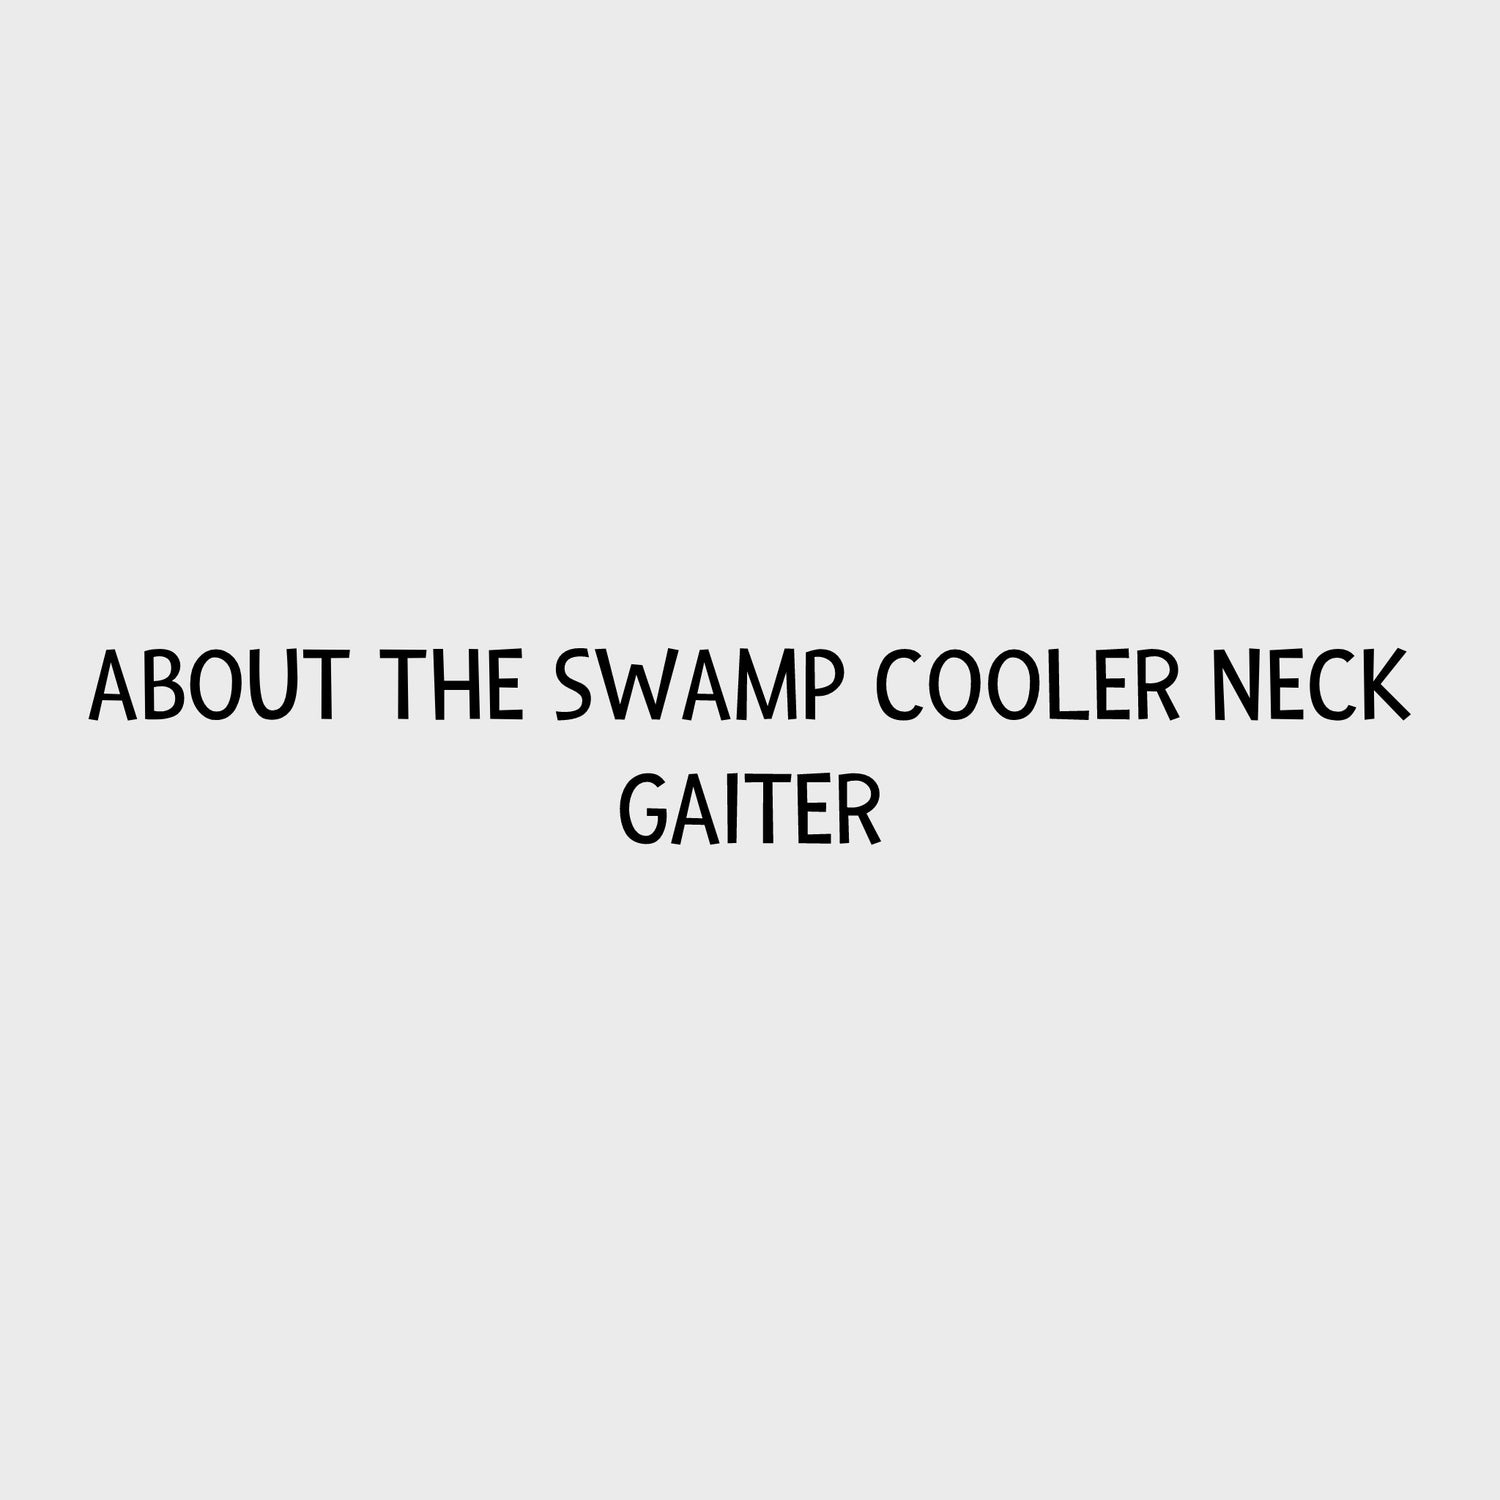 Video - Ruffwear Swamp Cooler Neck Gaiter